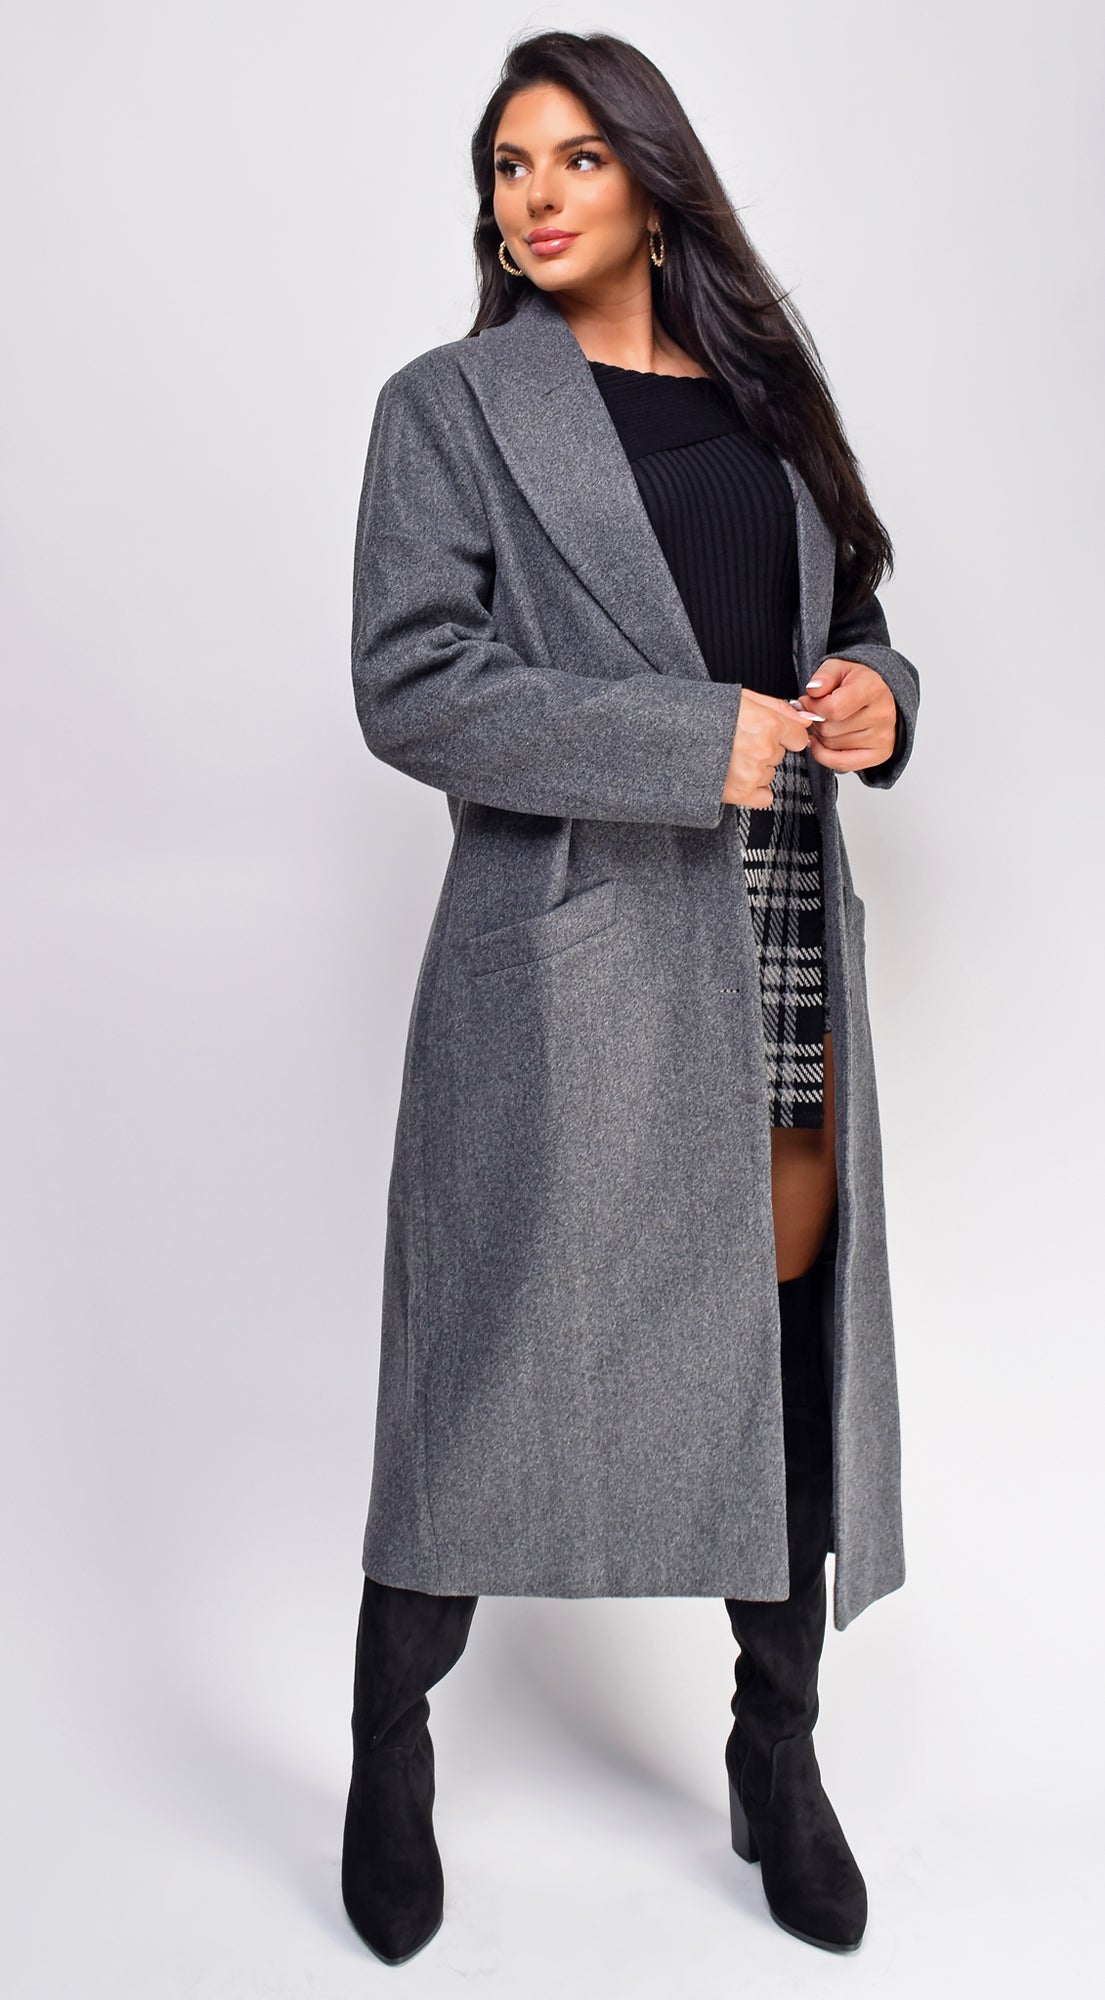 Yeva Gray Long Collared Coat